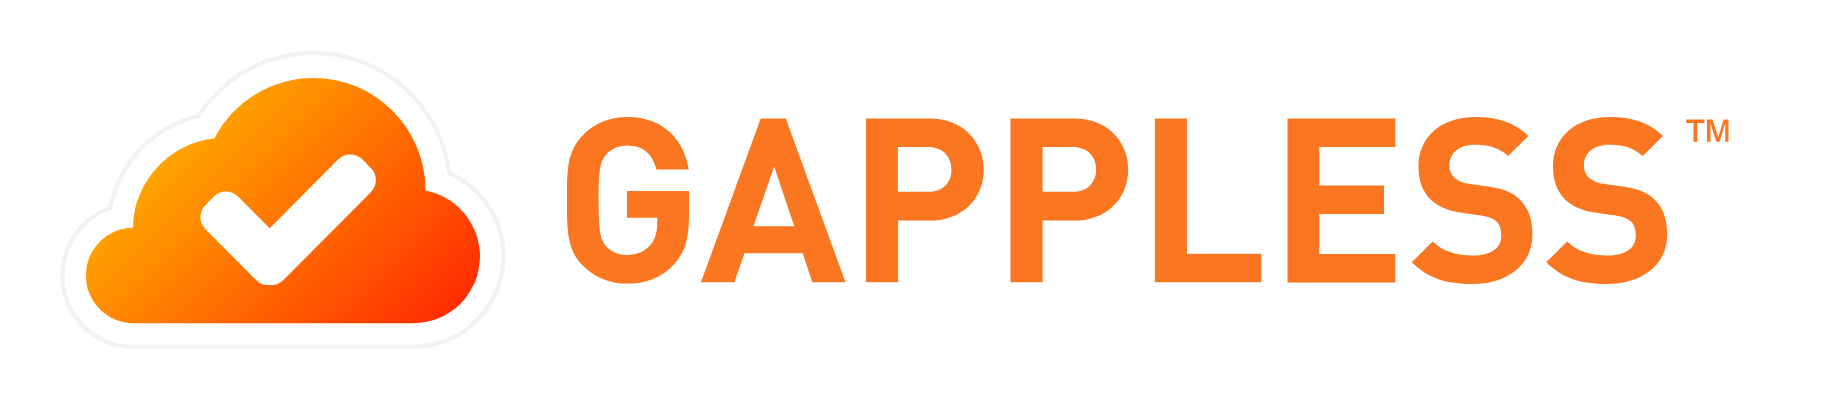 Gappless benoemt CEO-duo voor scale-up fase logo